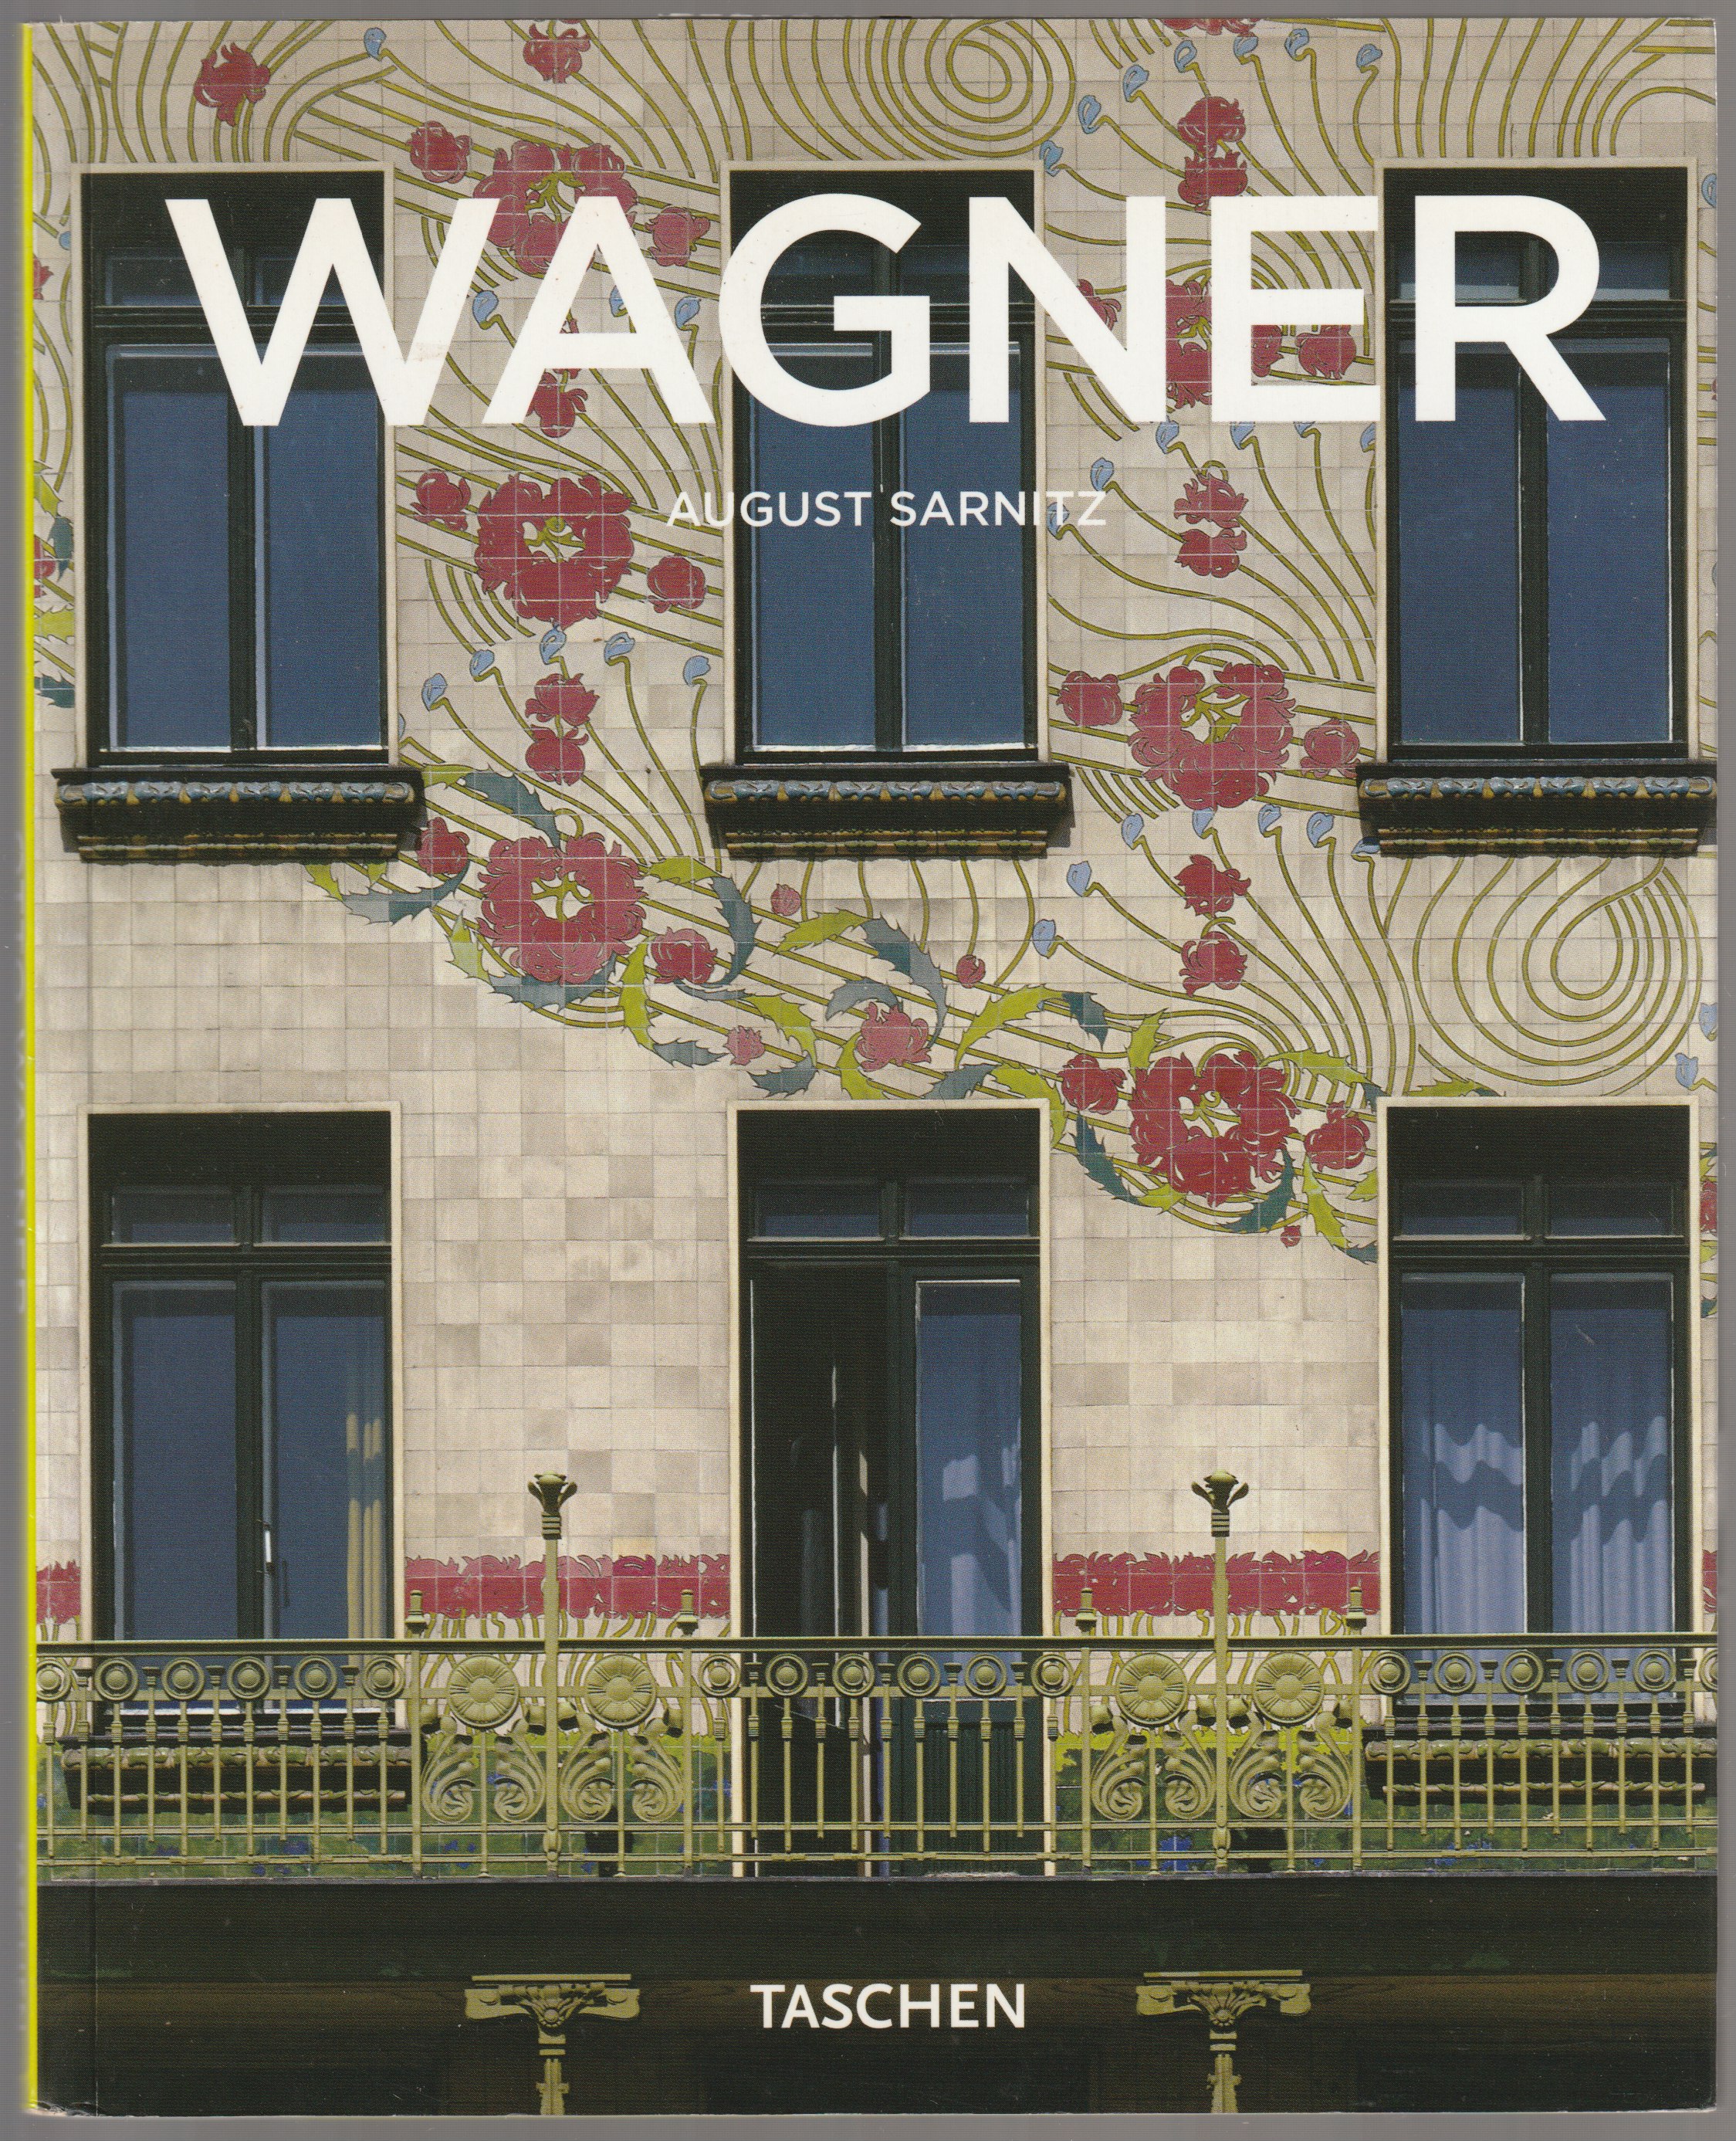 Otto Wagner 1841-1918 : forerunner of modern architecture.